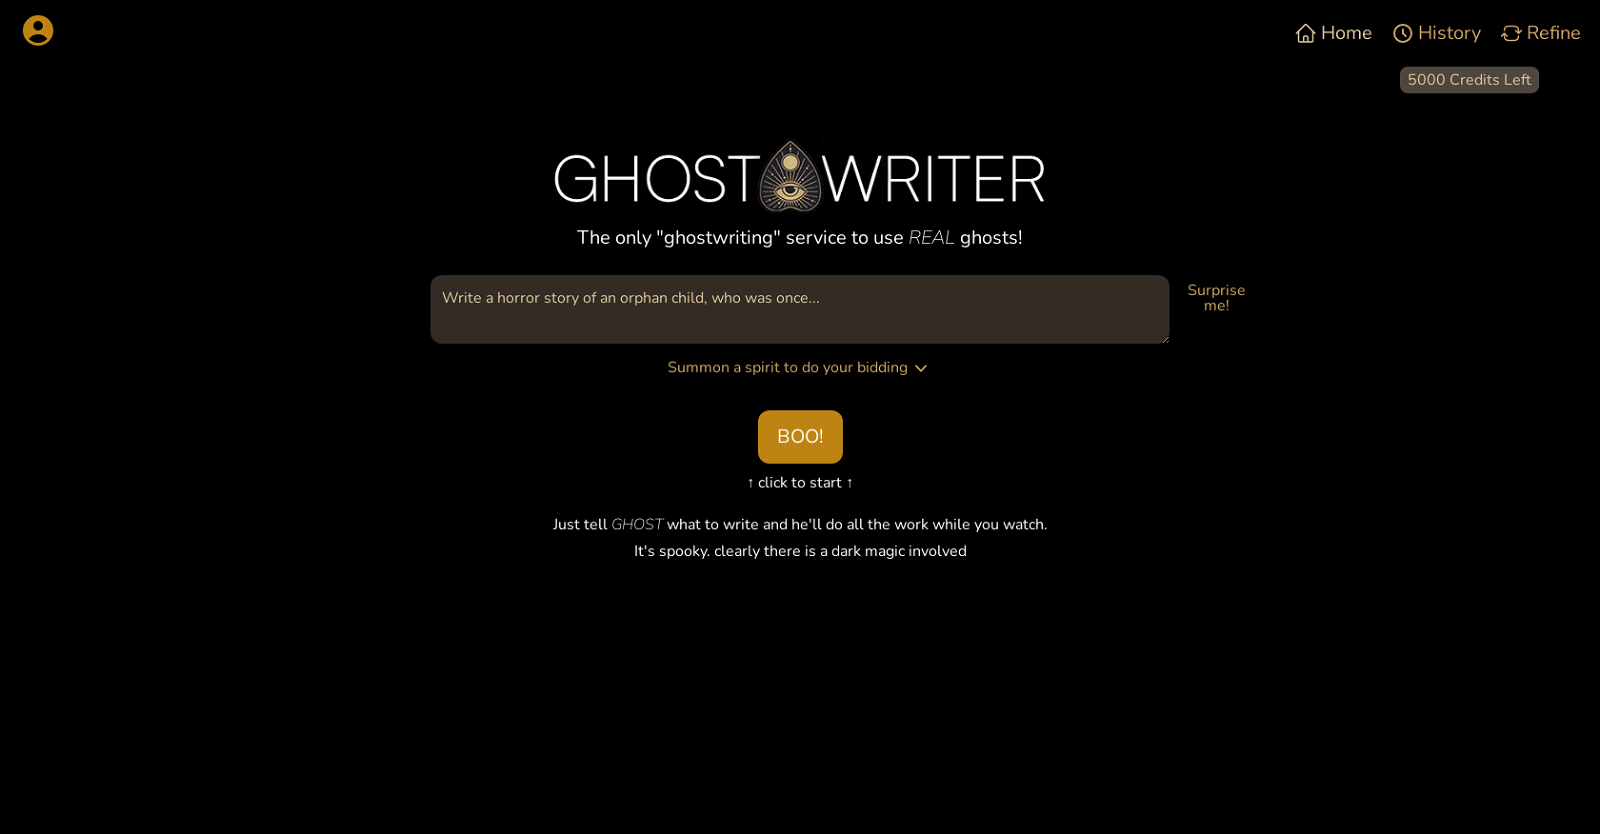 GhostTheWriter